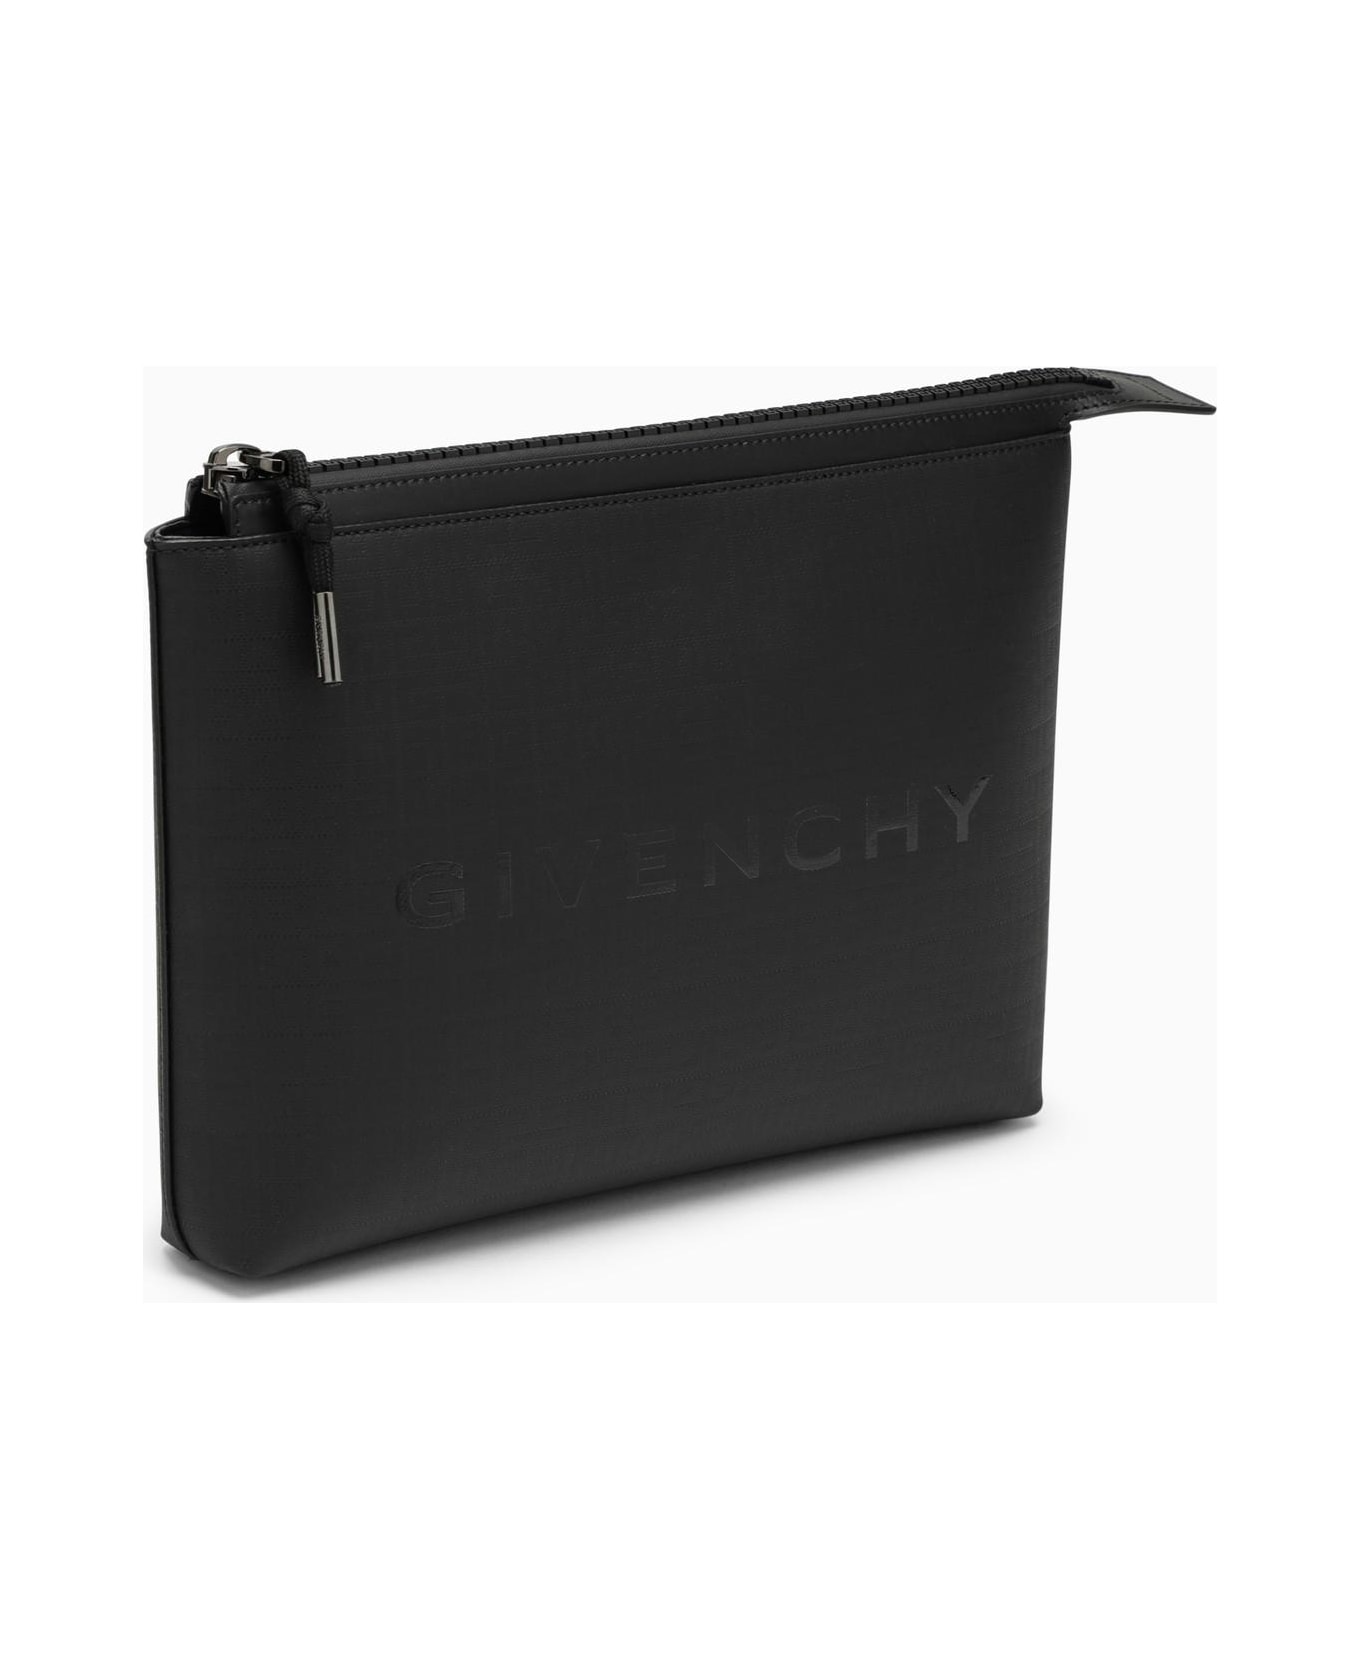 Givenchy Medium Pouch In 4g Nylon - Black